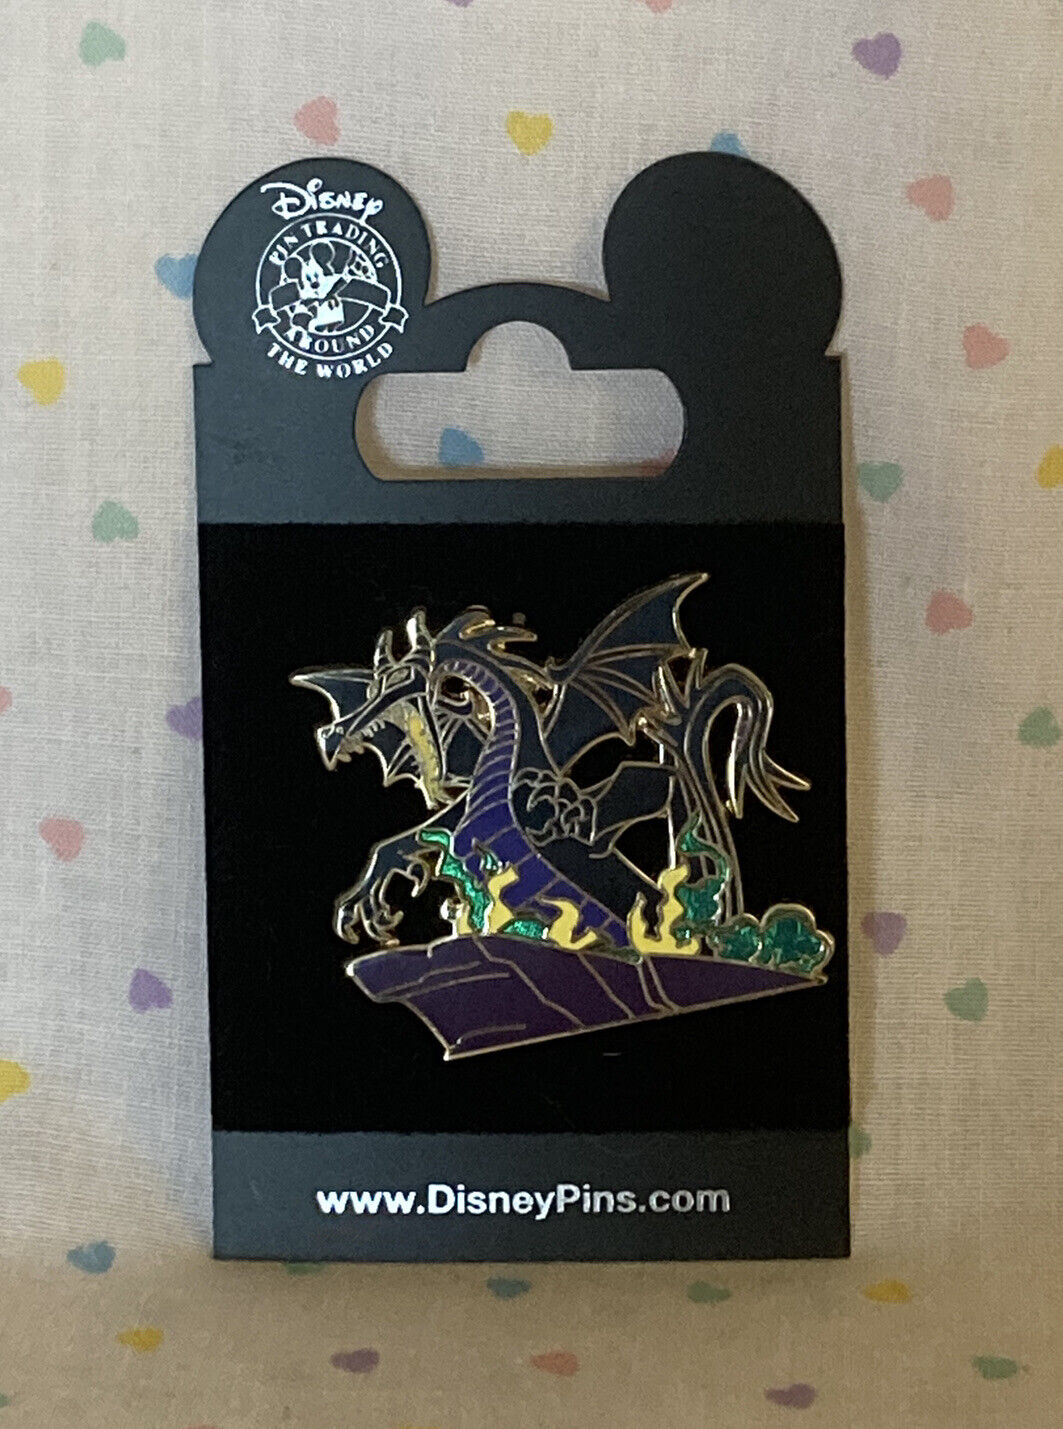 Disney Pin Trading Sleeping Beauty Villain Maleficent Dragon on Cliff Fire